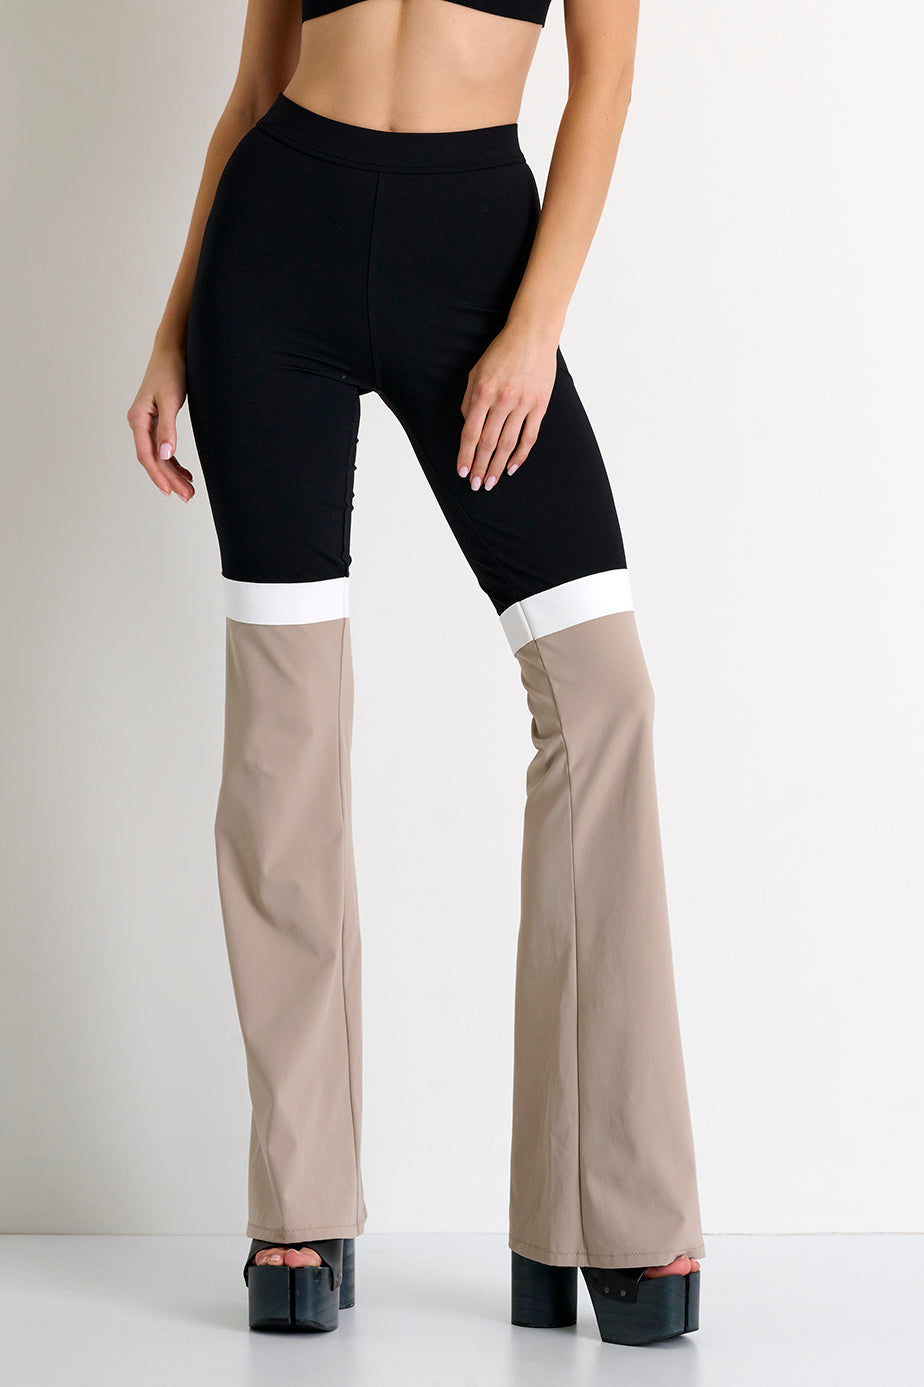 Entyinea Women's Flare Jeans Casual Plus Szie High Waisted Stretchy Denim  Pants Grey XL 